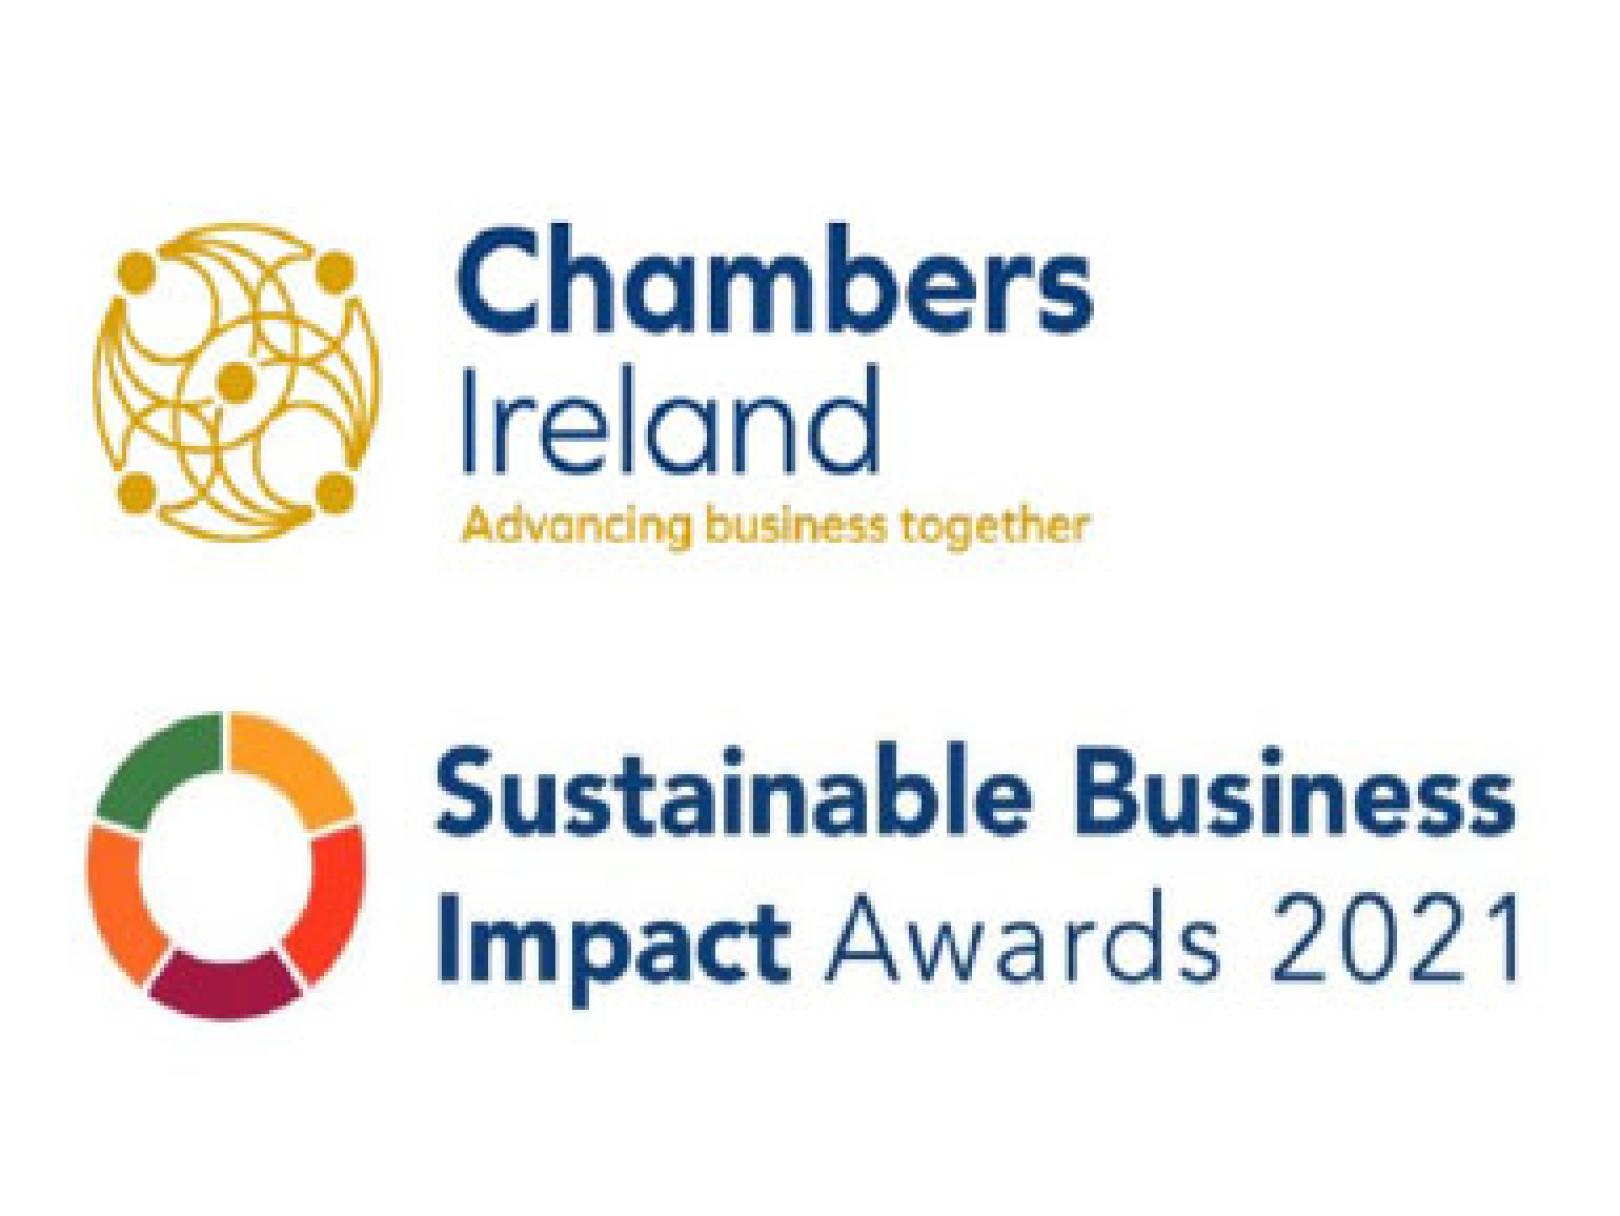 Chambers Ireland award logo